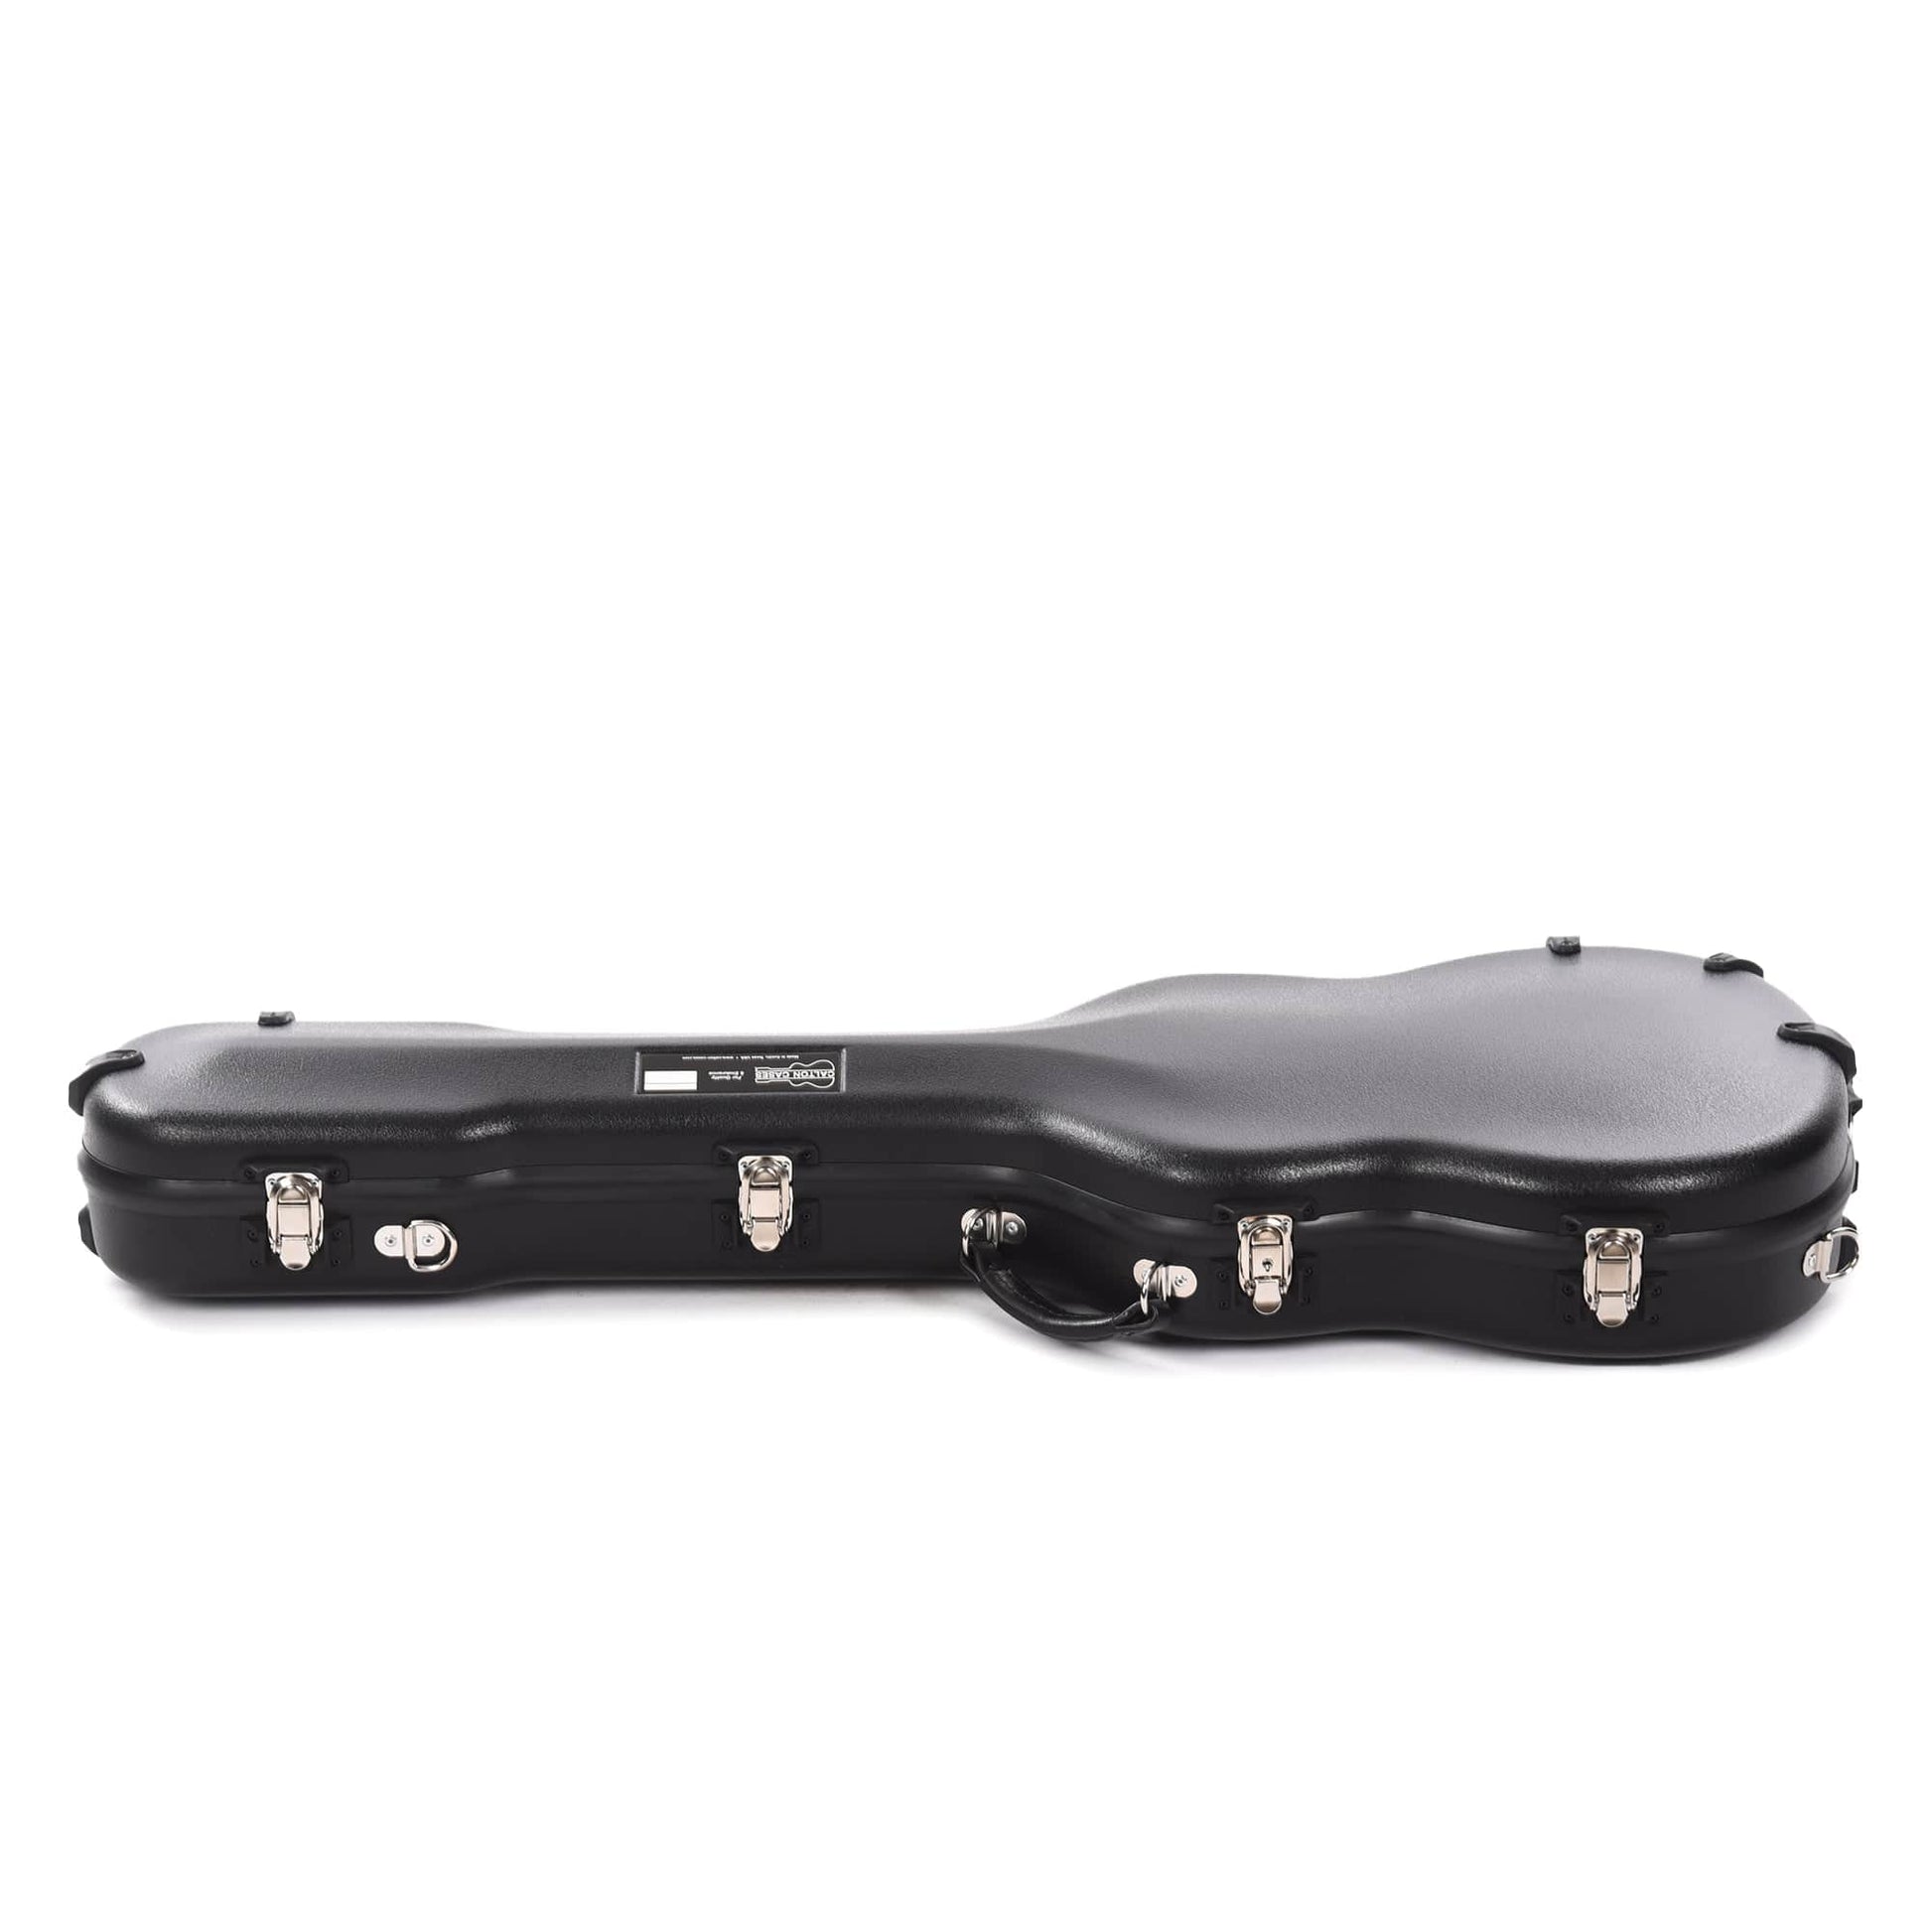 Calton Cases Electric Telecaster Guitar Case Black w/Red Velvet Interior Accessories / Cases and Gig Bags / Guitar Cases